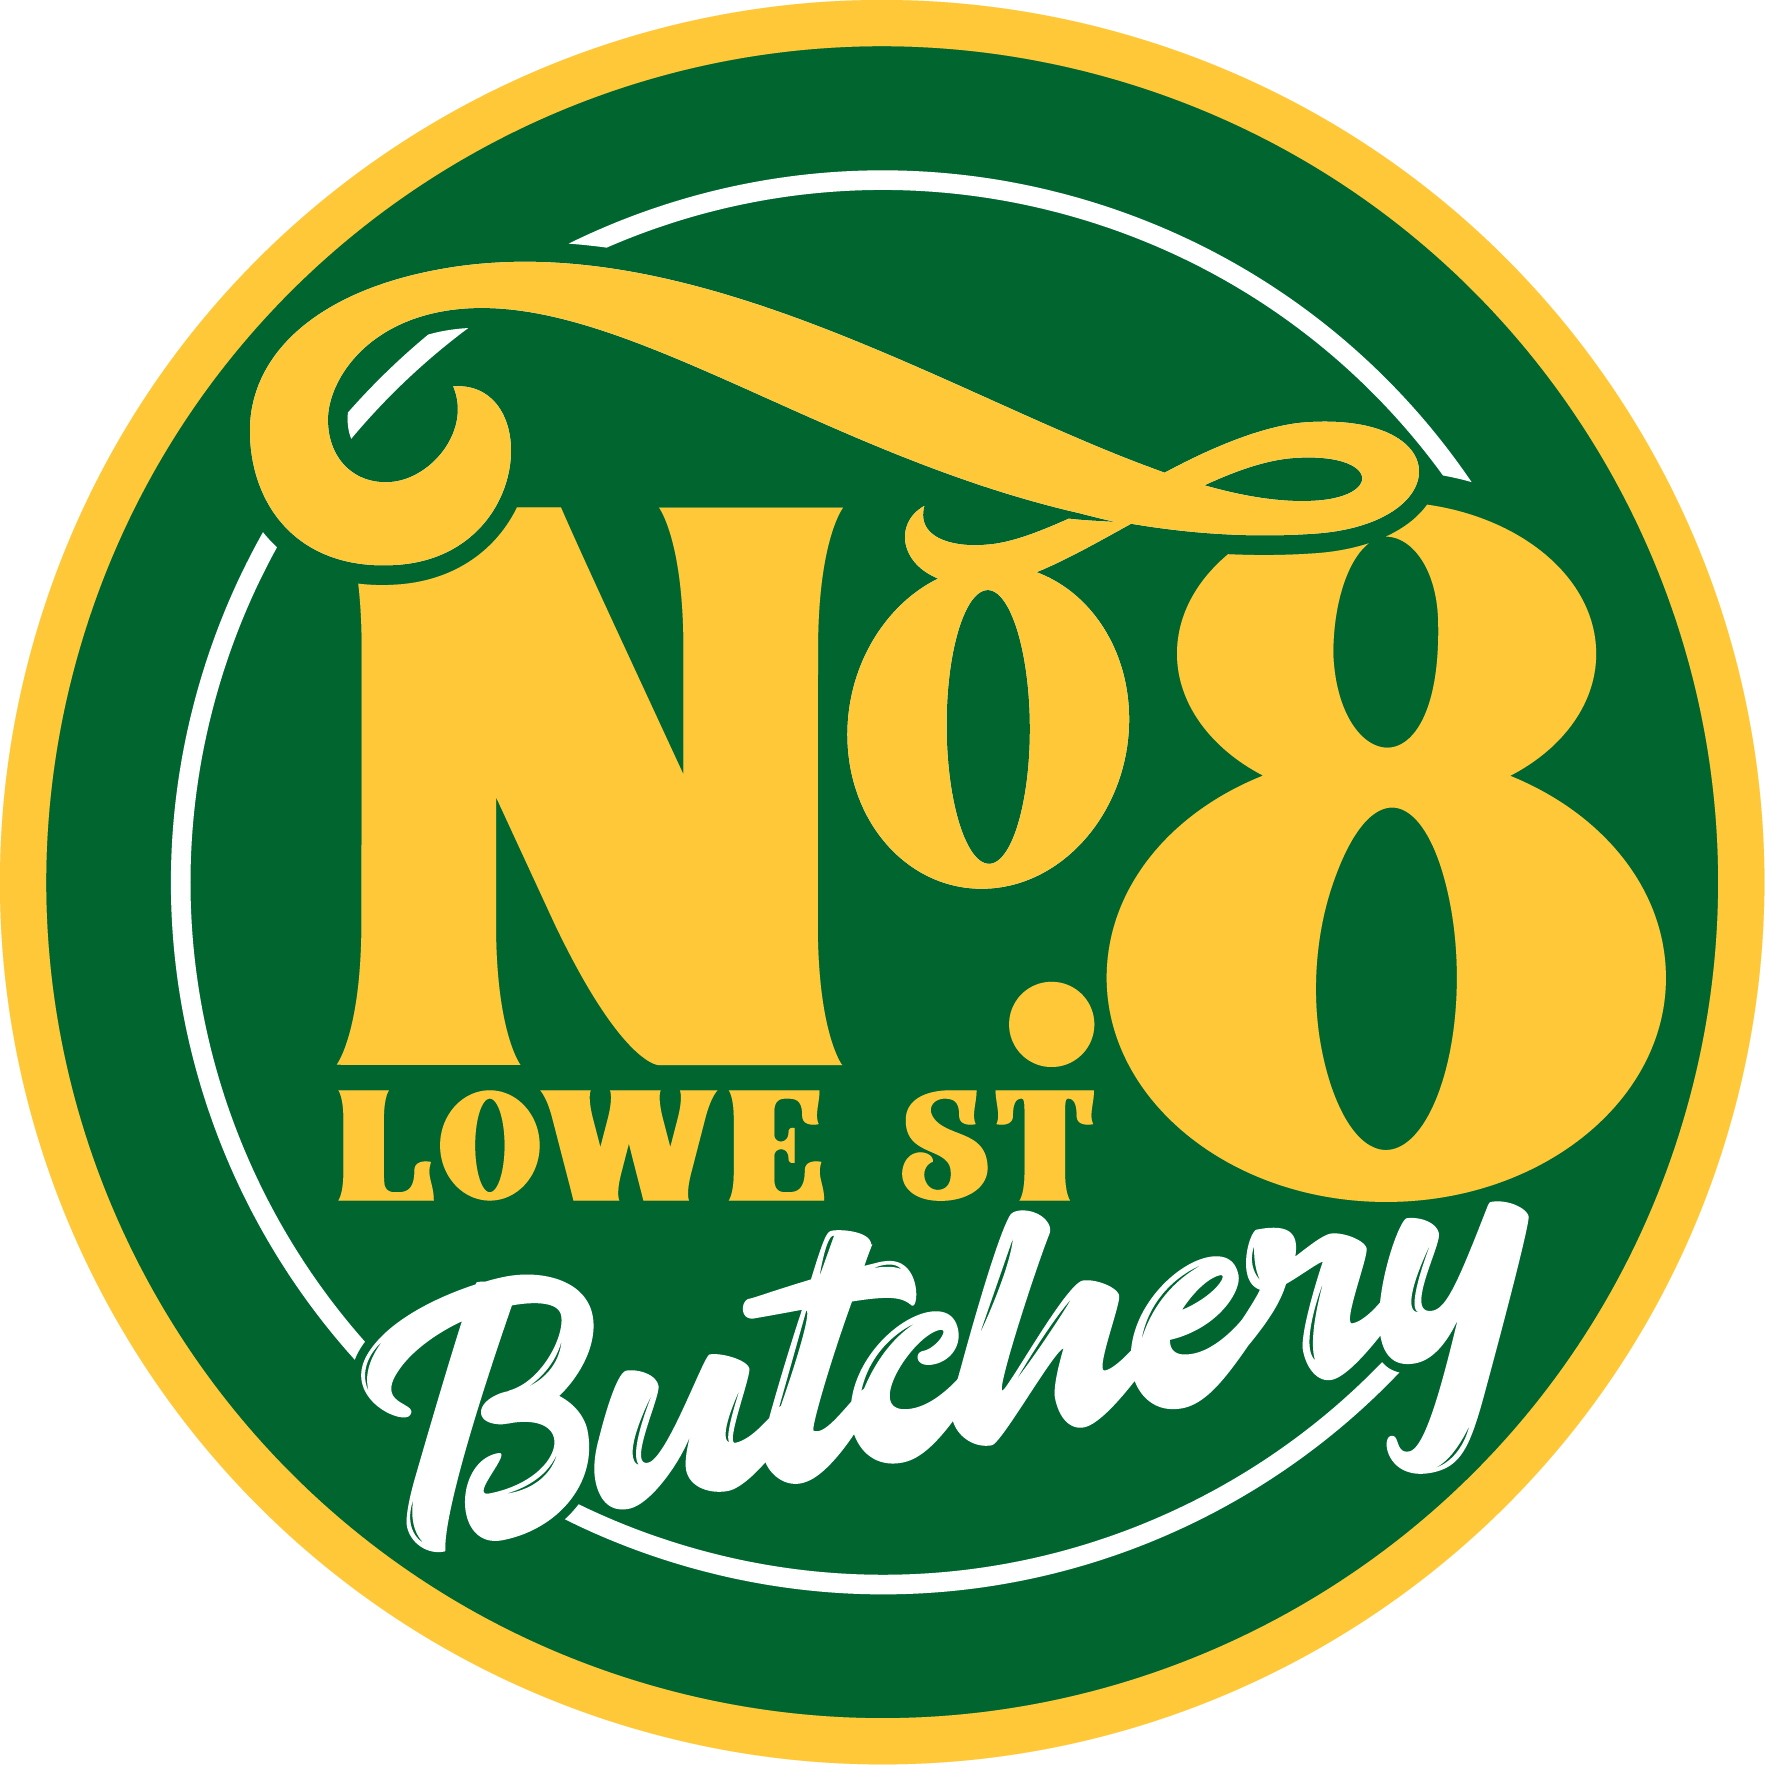 No.8 Butchery